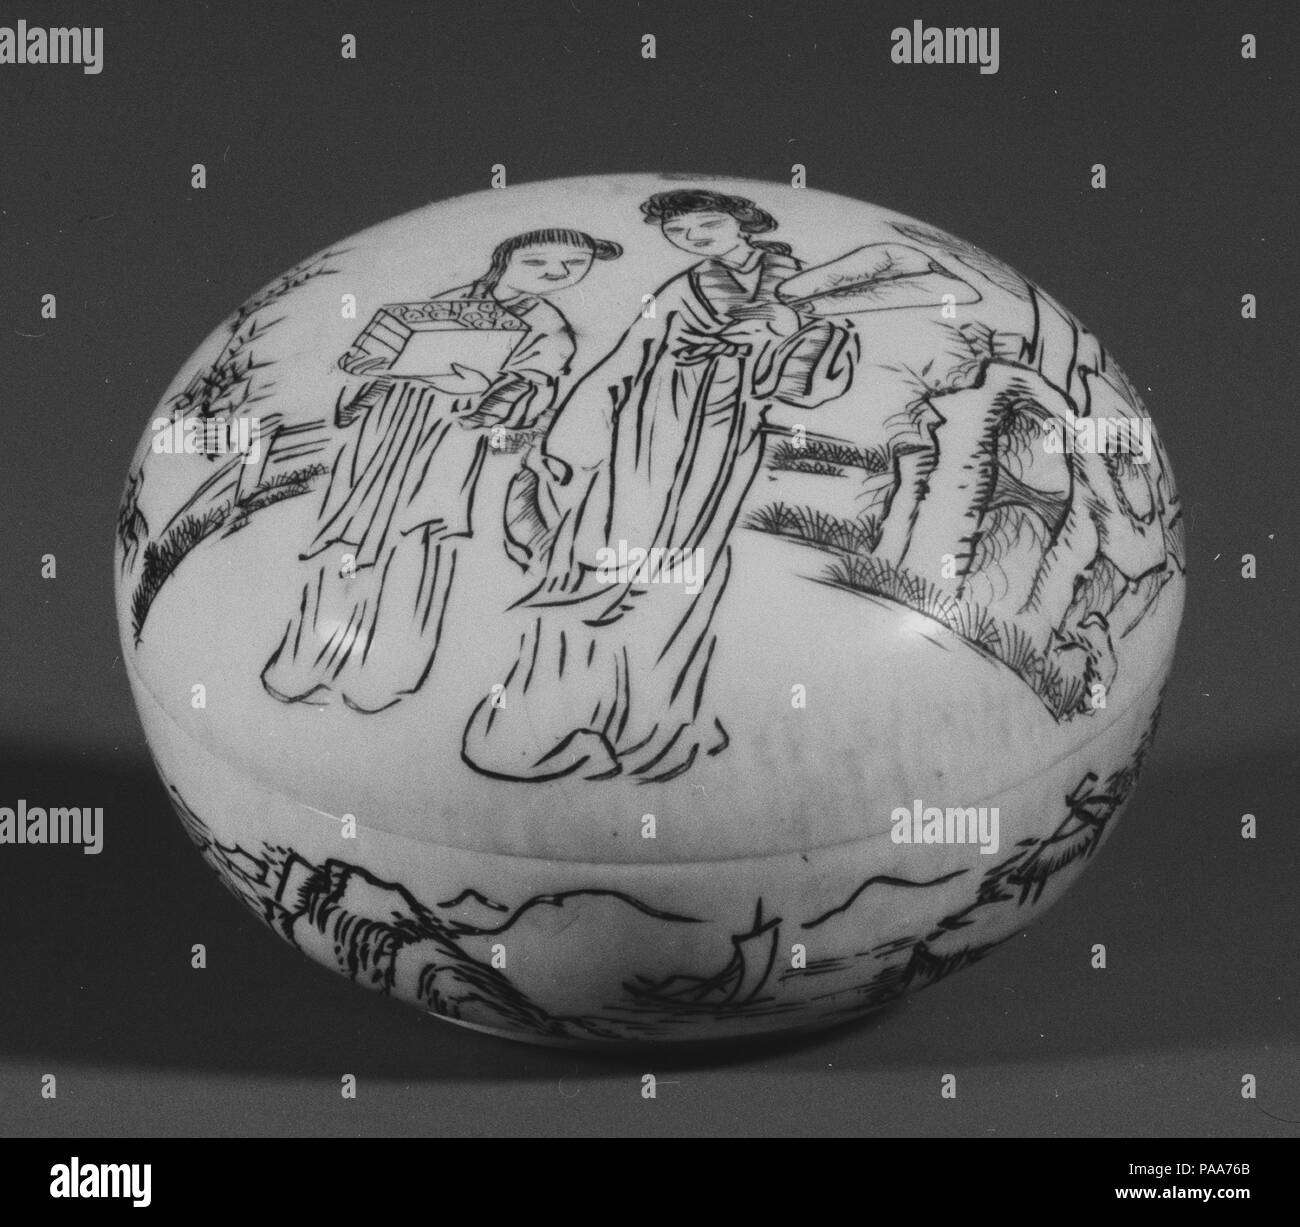 Pill box. Culture: China. Dimensions: H. 1 3/16 in. (3 cm); Diam. 2 1/16 in. (5.2 cm). Date: late 19th century. Museum: Metropolitan Museum of Art, New York, USA. Stock Photo